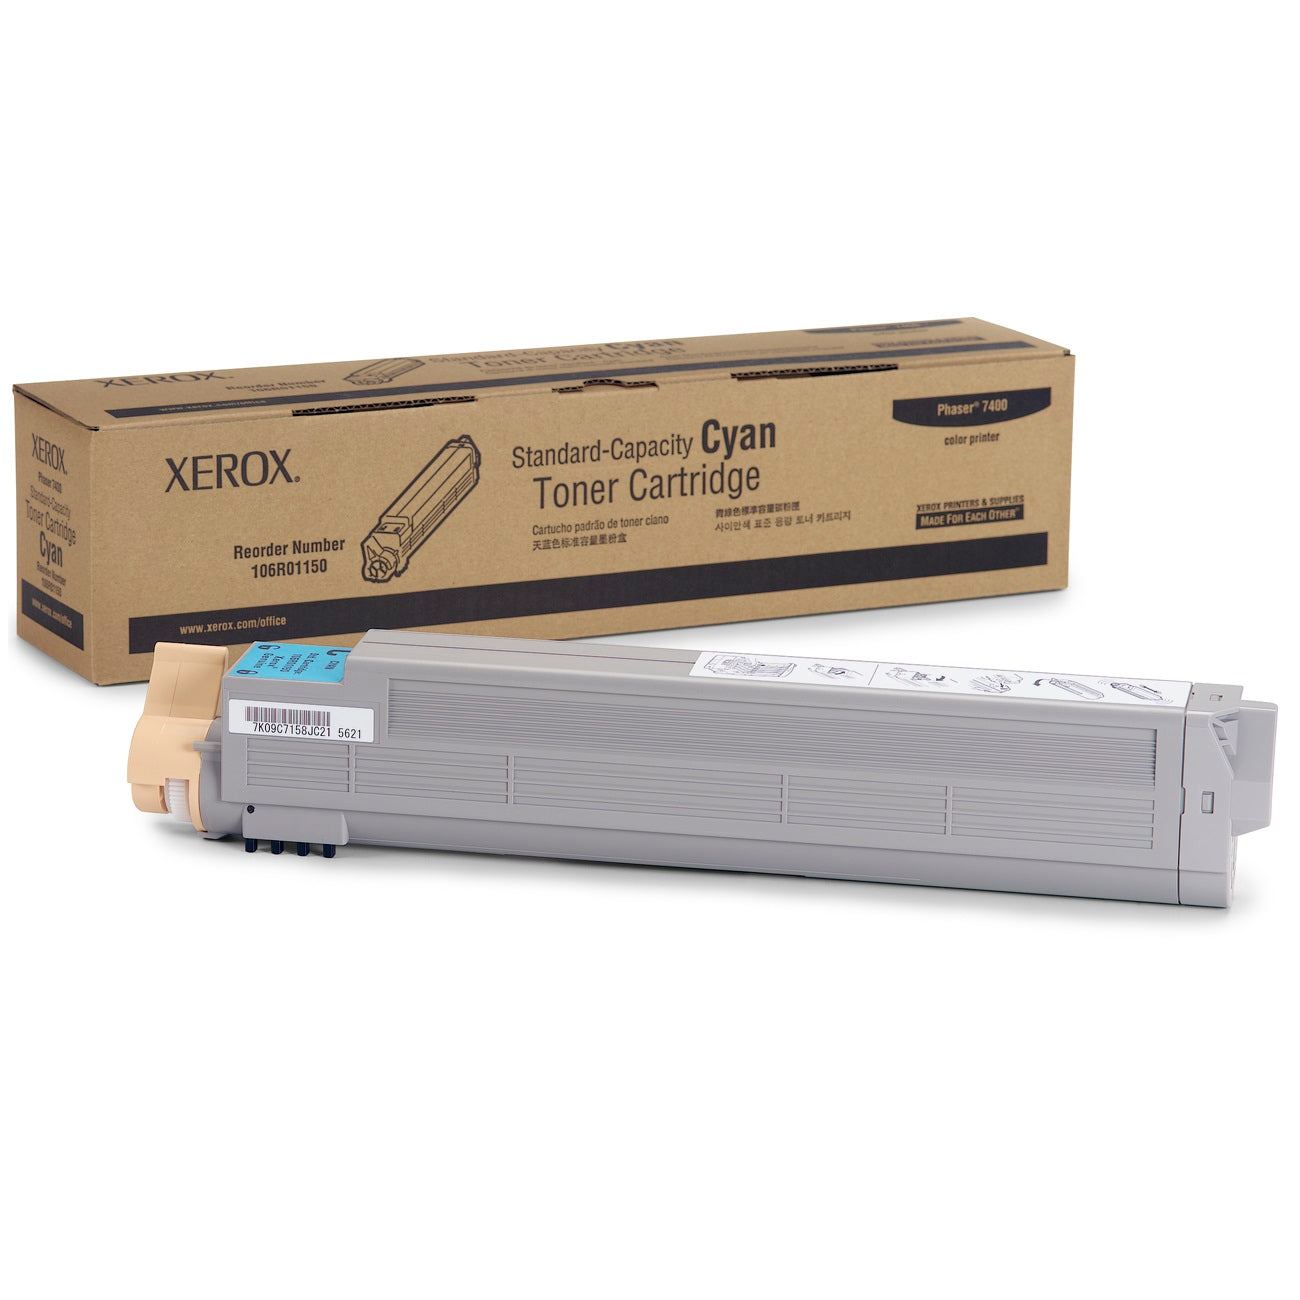 Absolute Toner XEROX 106R01150 Genuine Cyan Toner Cartridge For Xerox Phaser 7400 Color Laser Printer Original Xerox Cartridges